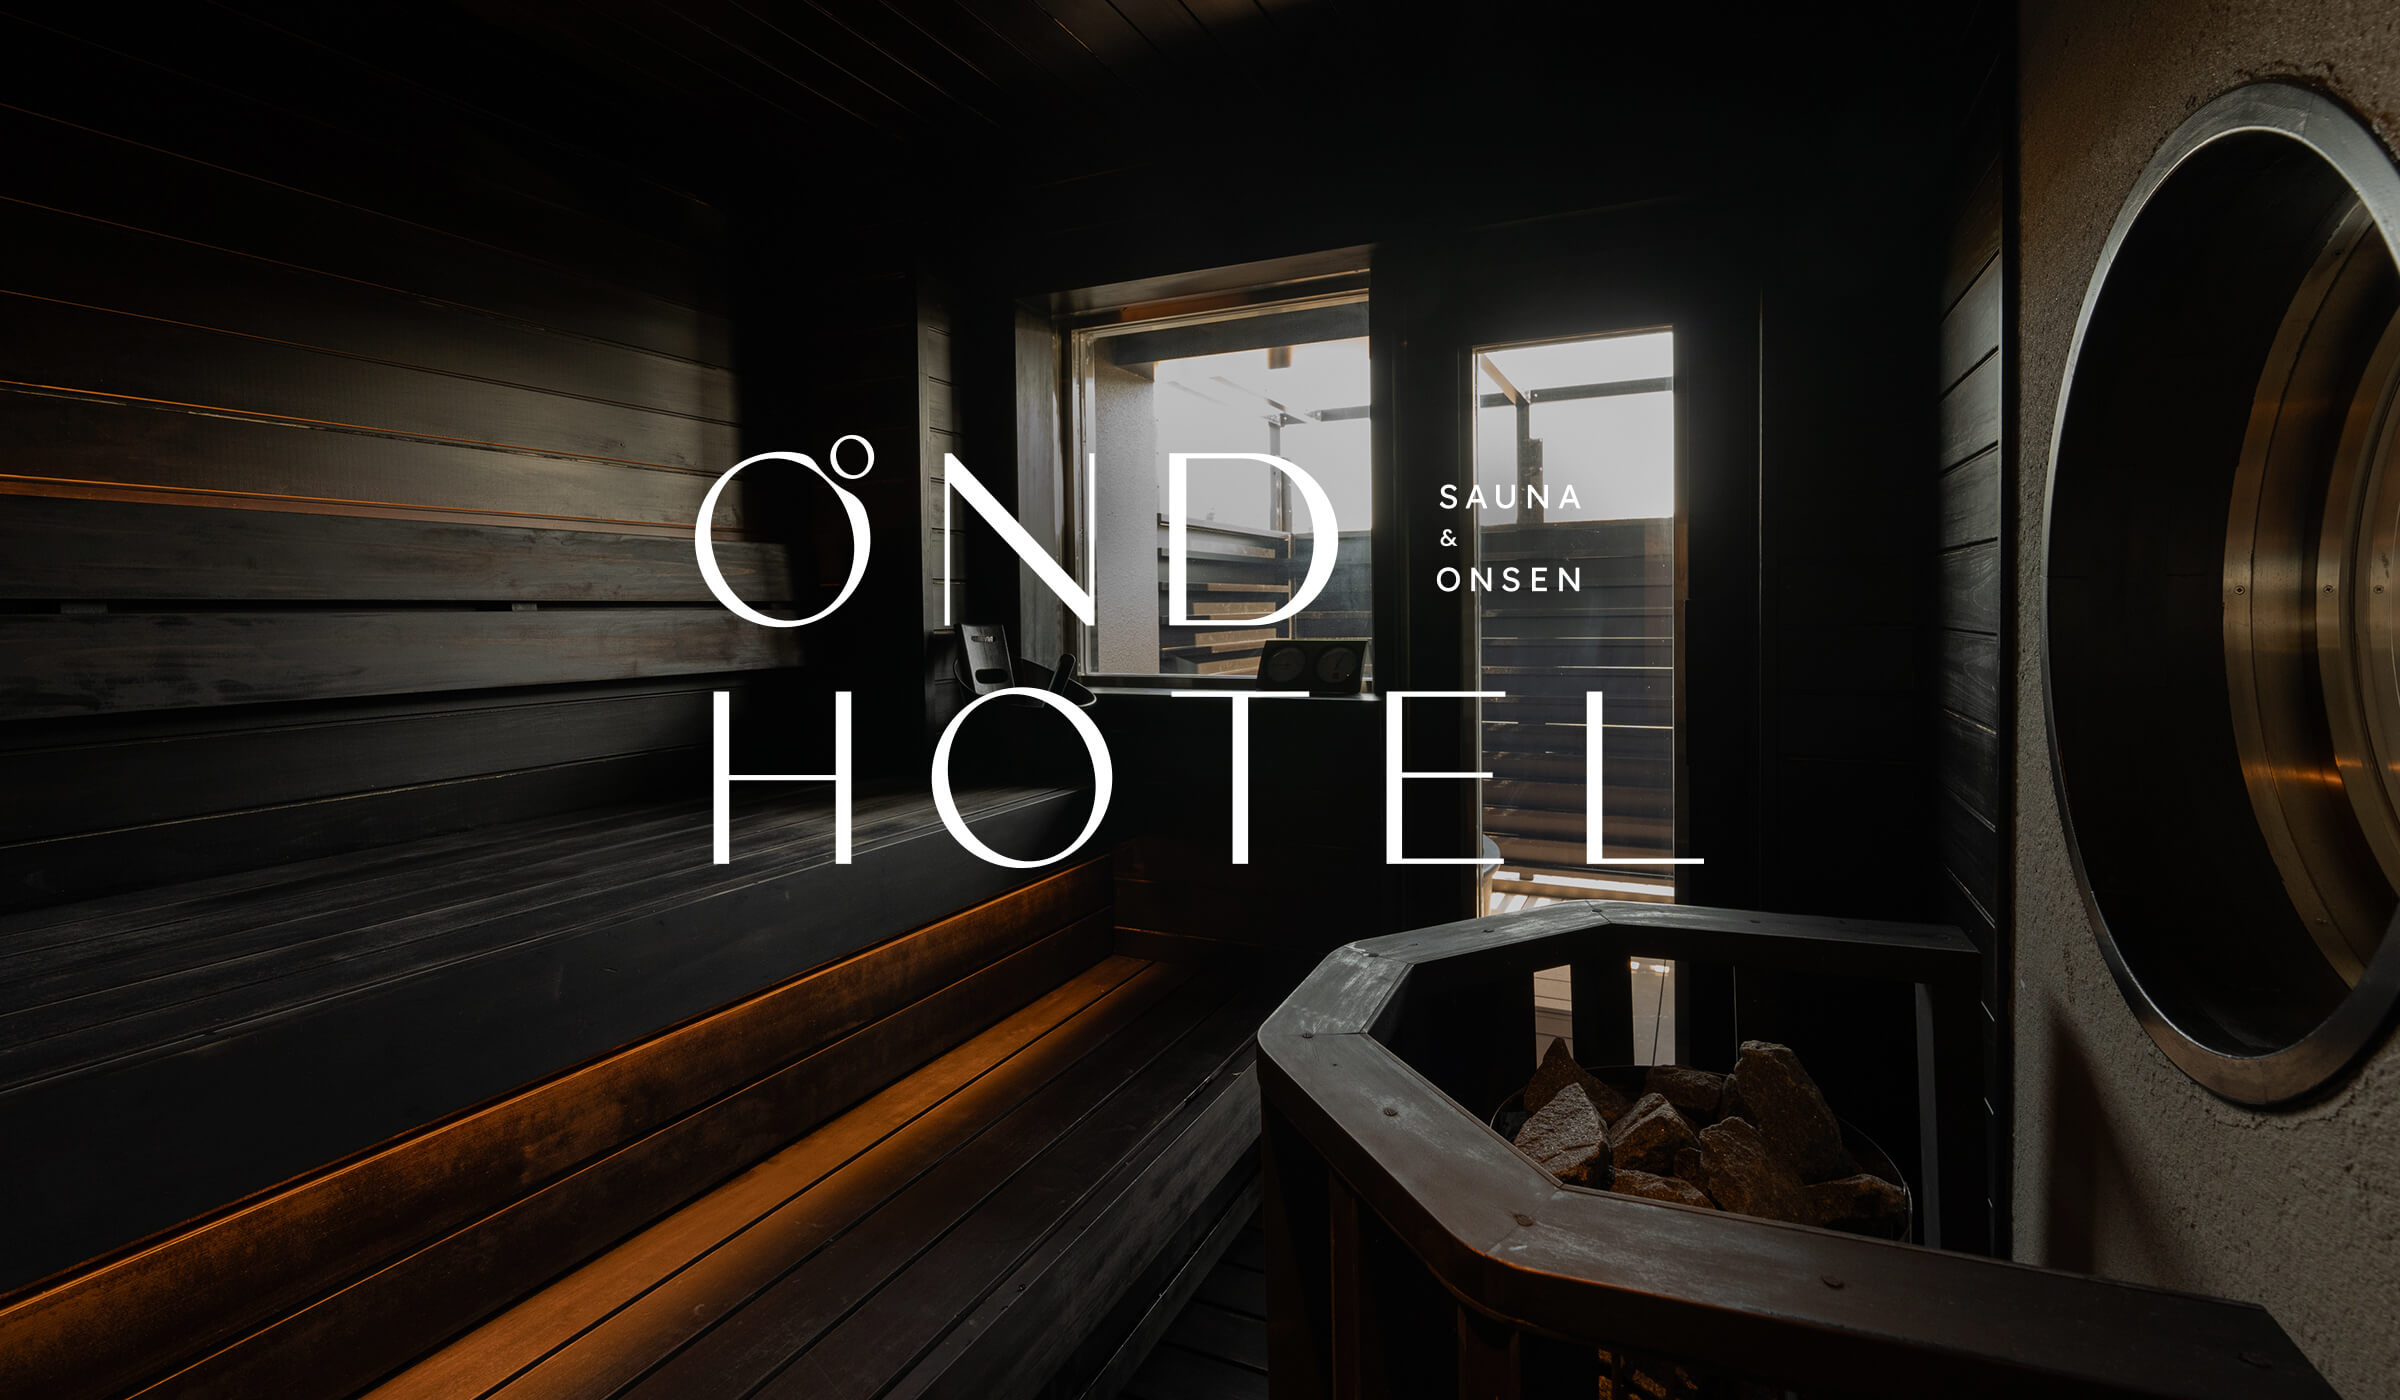 “OND HOTEL” Branding Project in Takeo, Saga